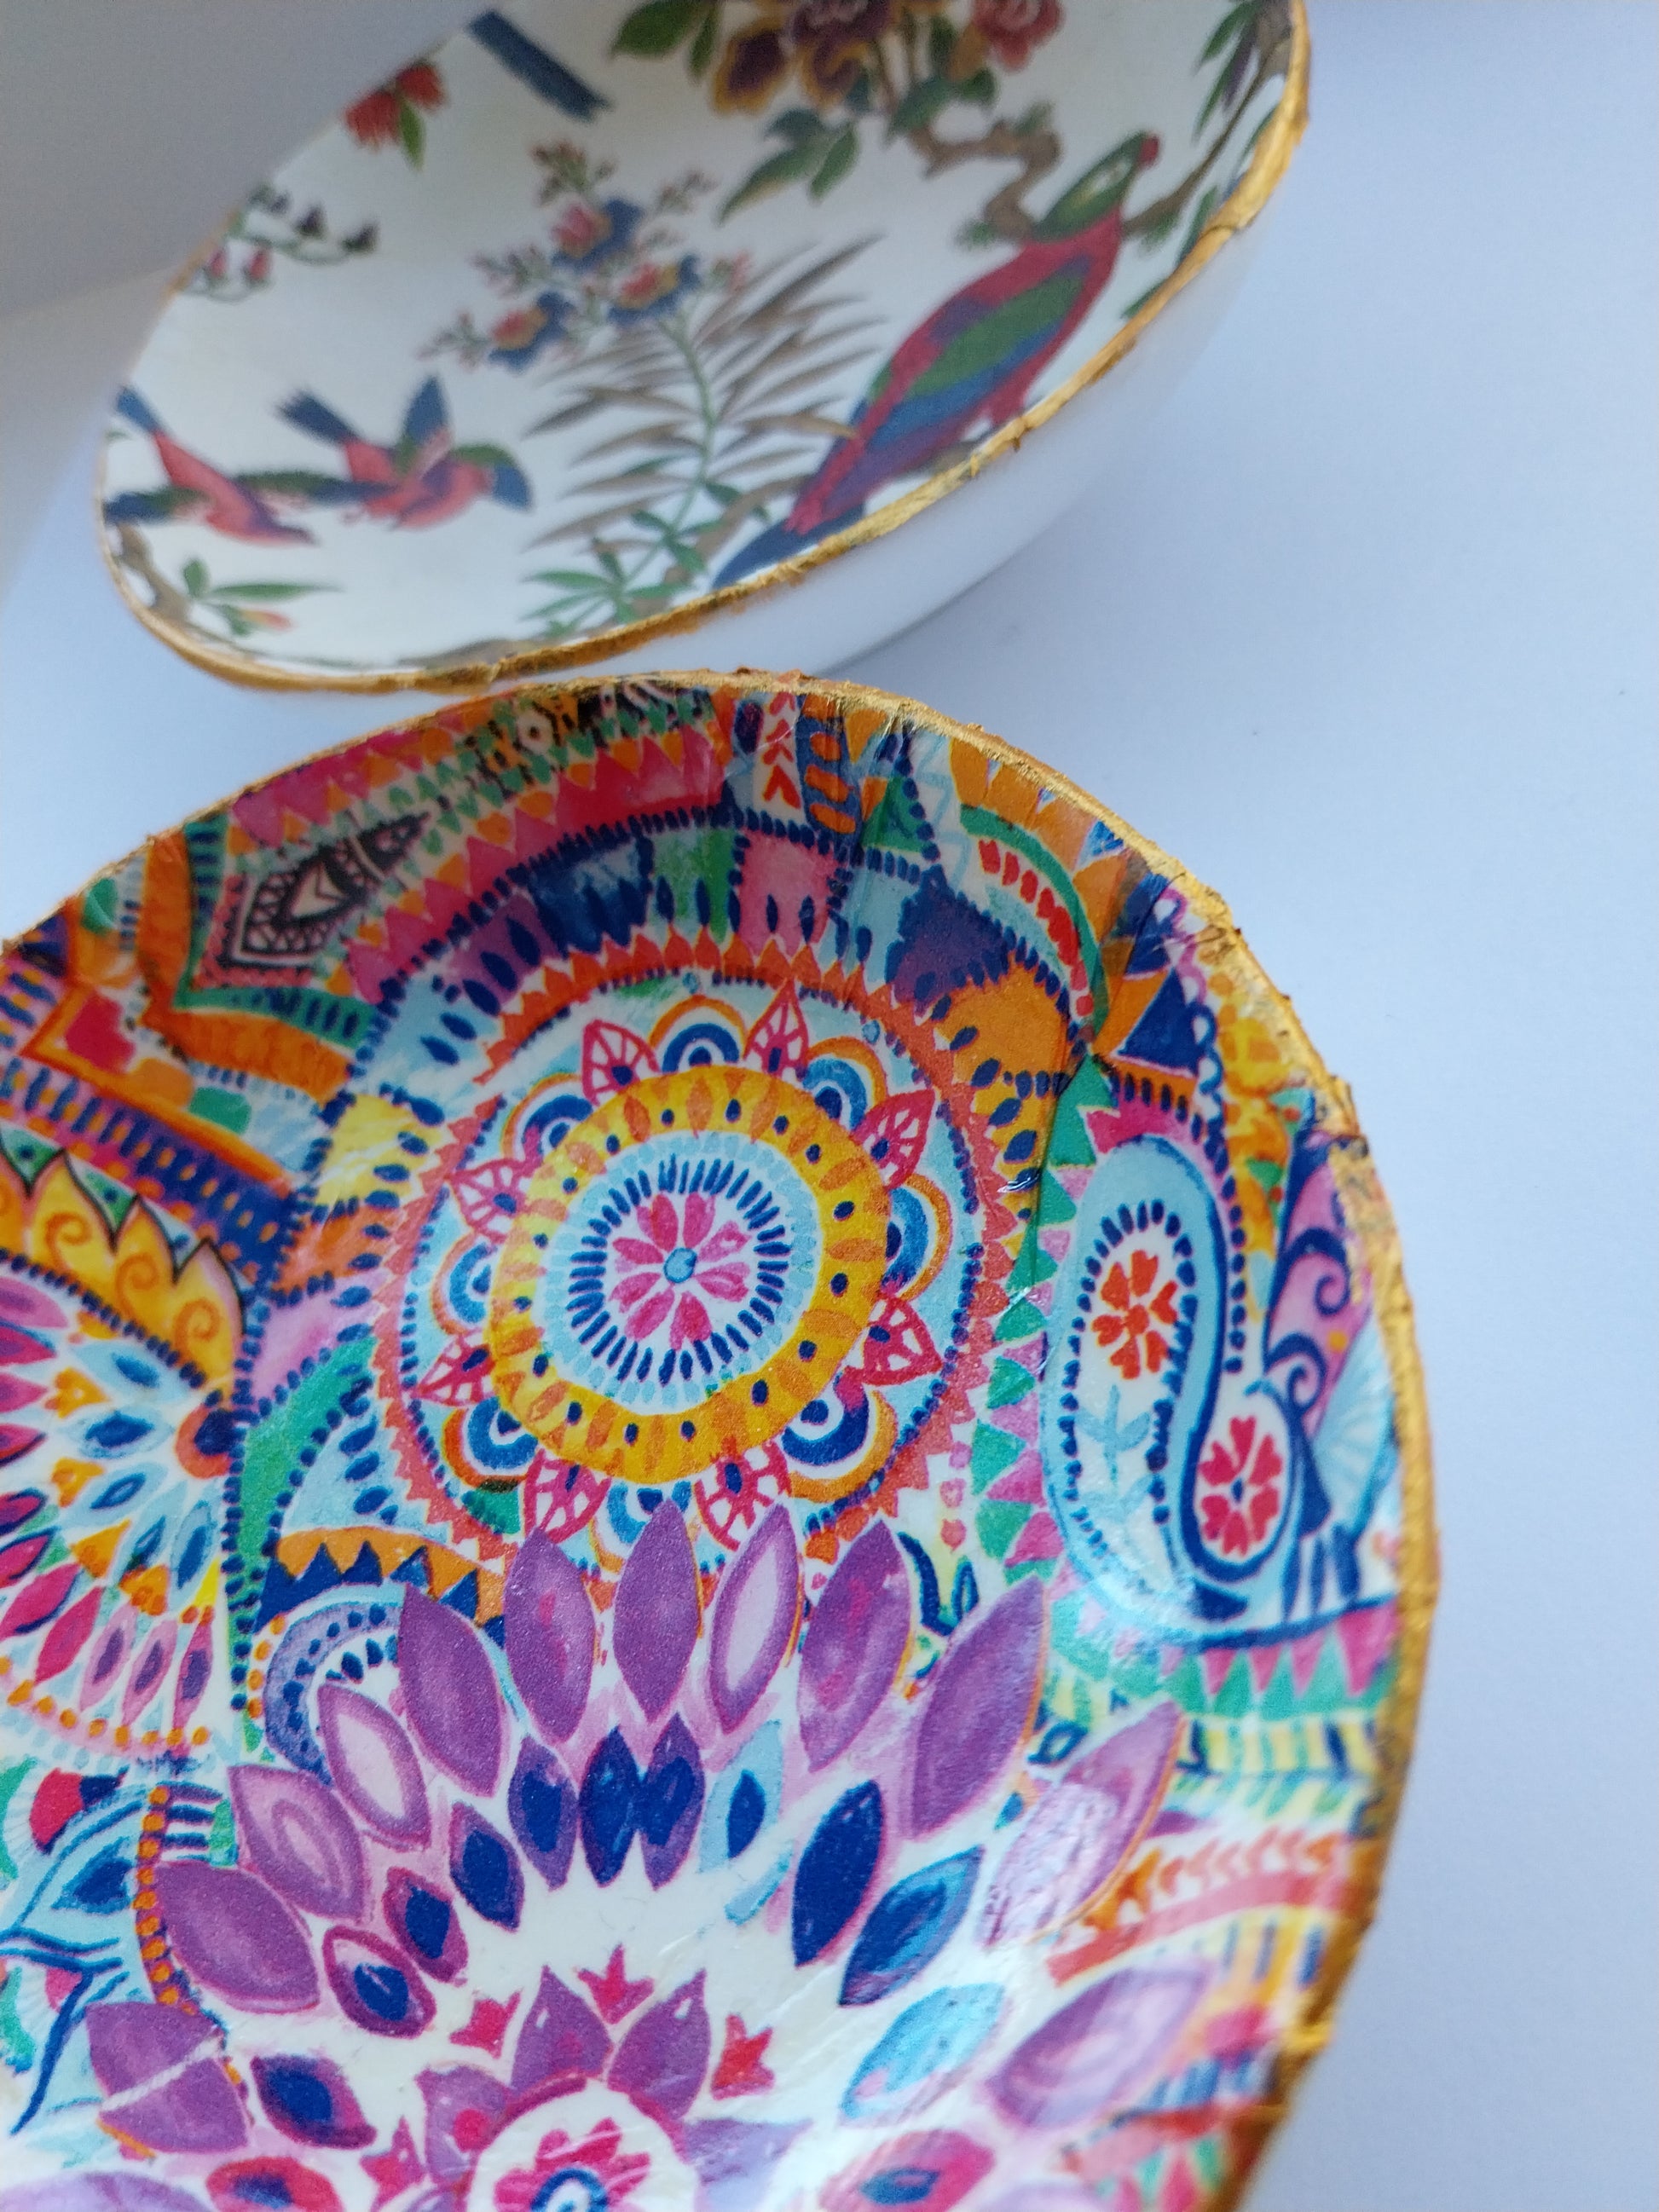 Ceramic trinket dishes